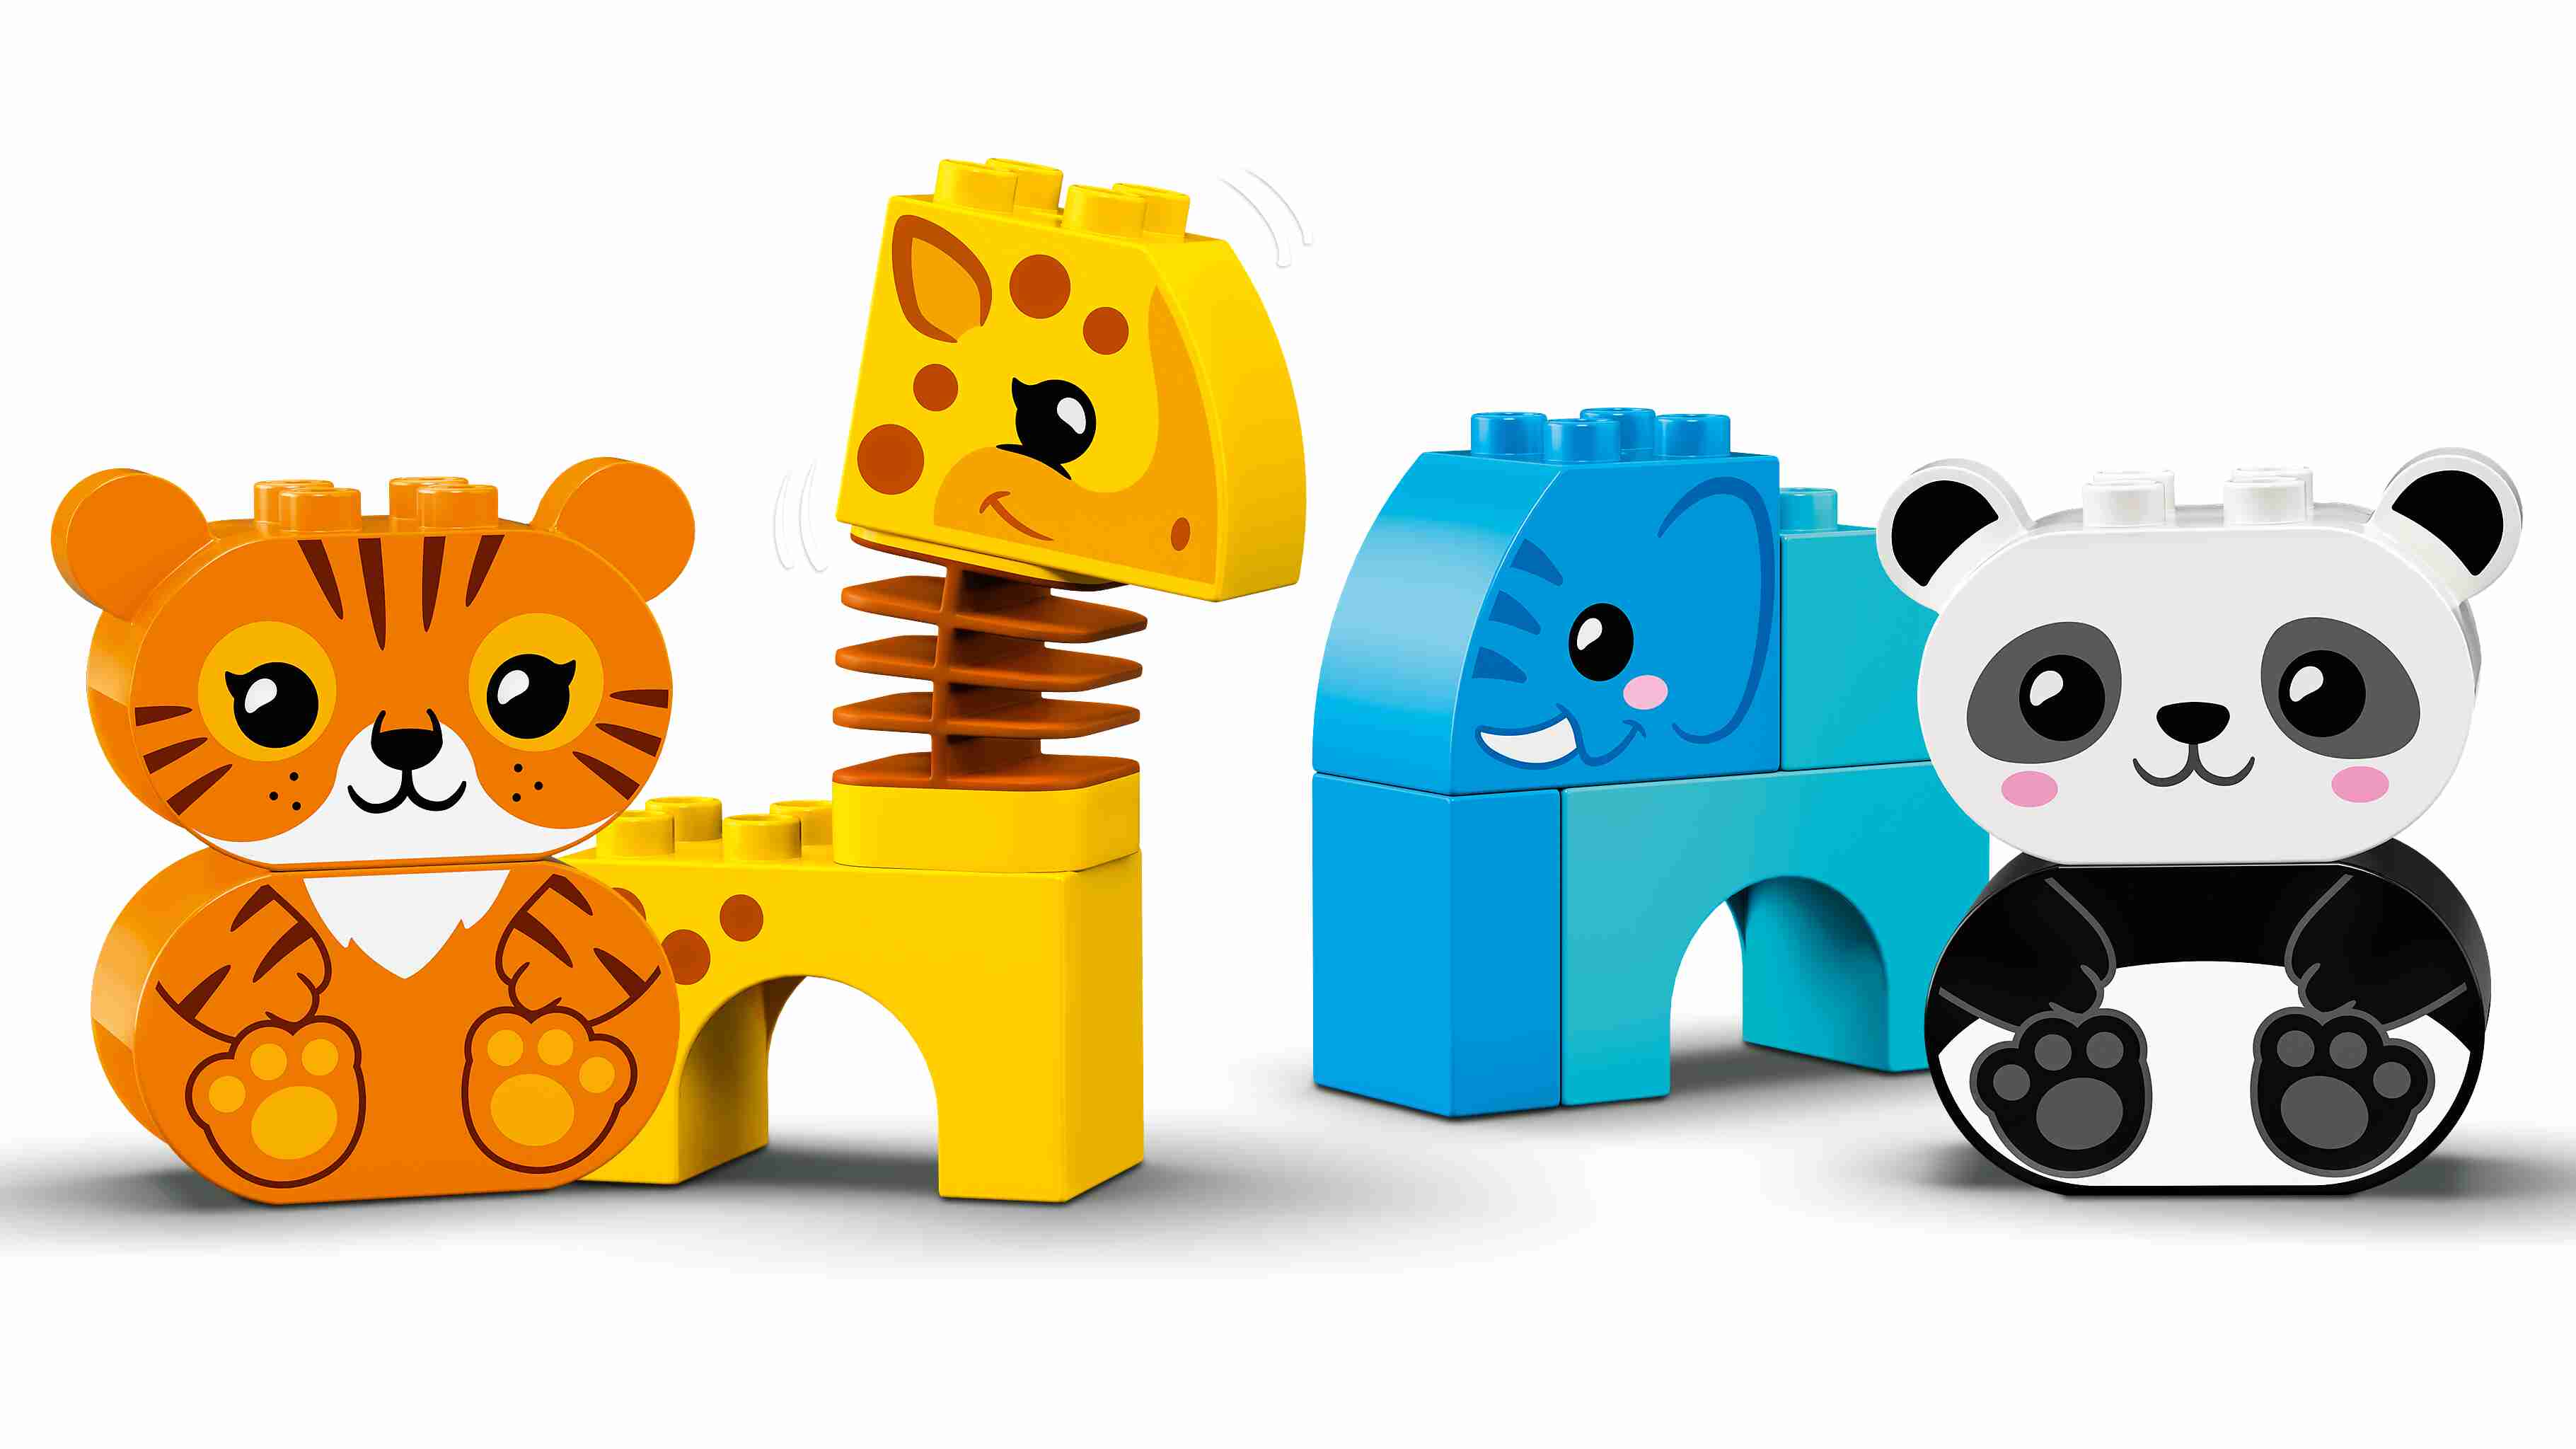 LEGO 10955 DUPLO Mein erster Tierzug, Elefant, Tiger, Giraffe, Panda